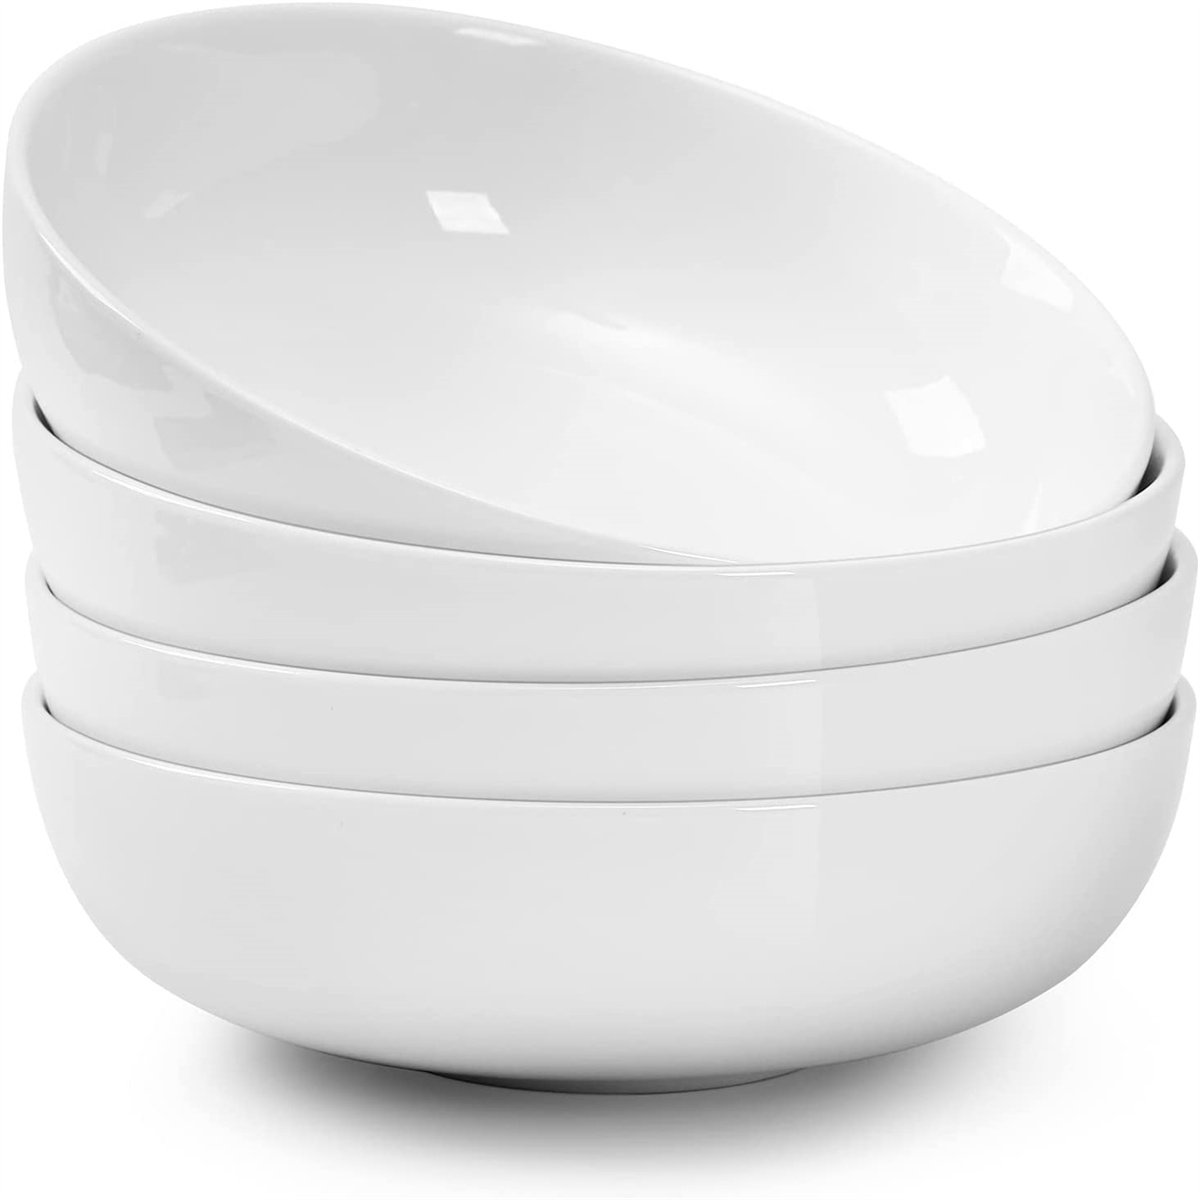 DOWAN 8 Large Serving Bowls - 2 Quart Big Salad Bowl, Porcelain